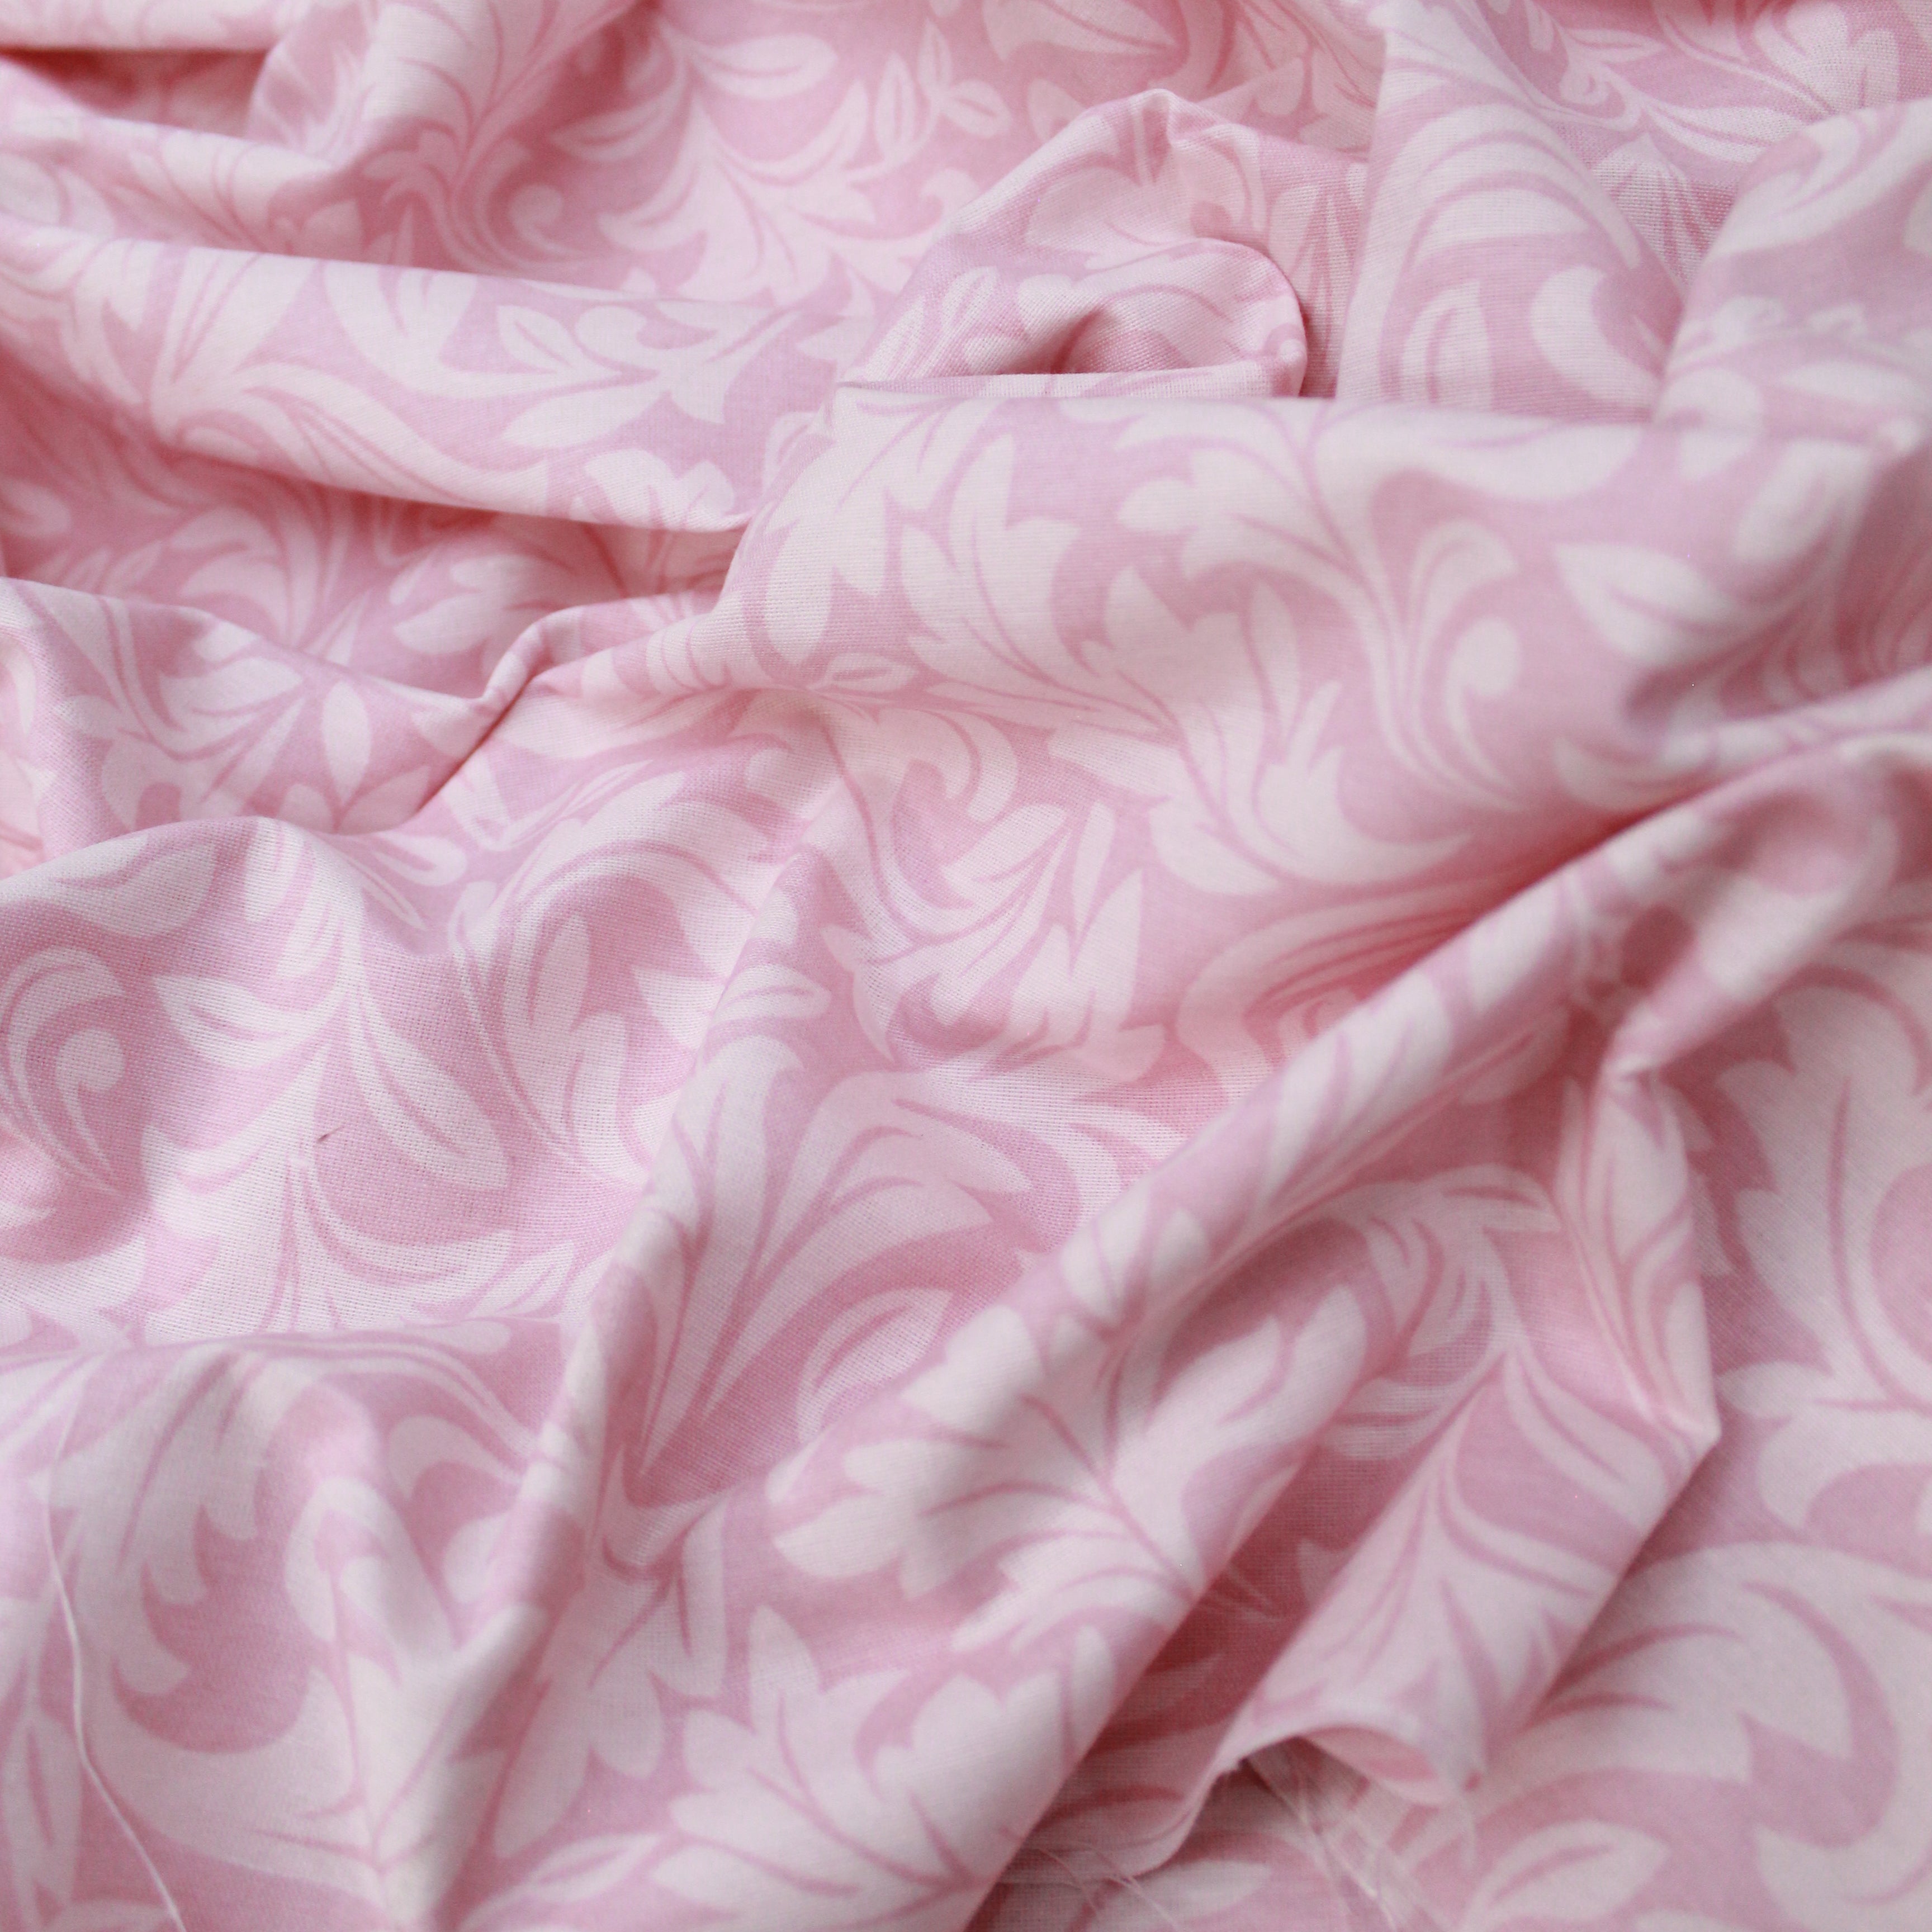 Premium Quality Super Wide Cotton Blend Sheeting "Leaf's" 94" Wide Pink